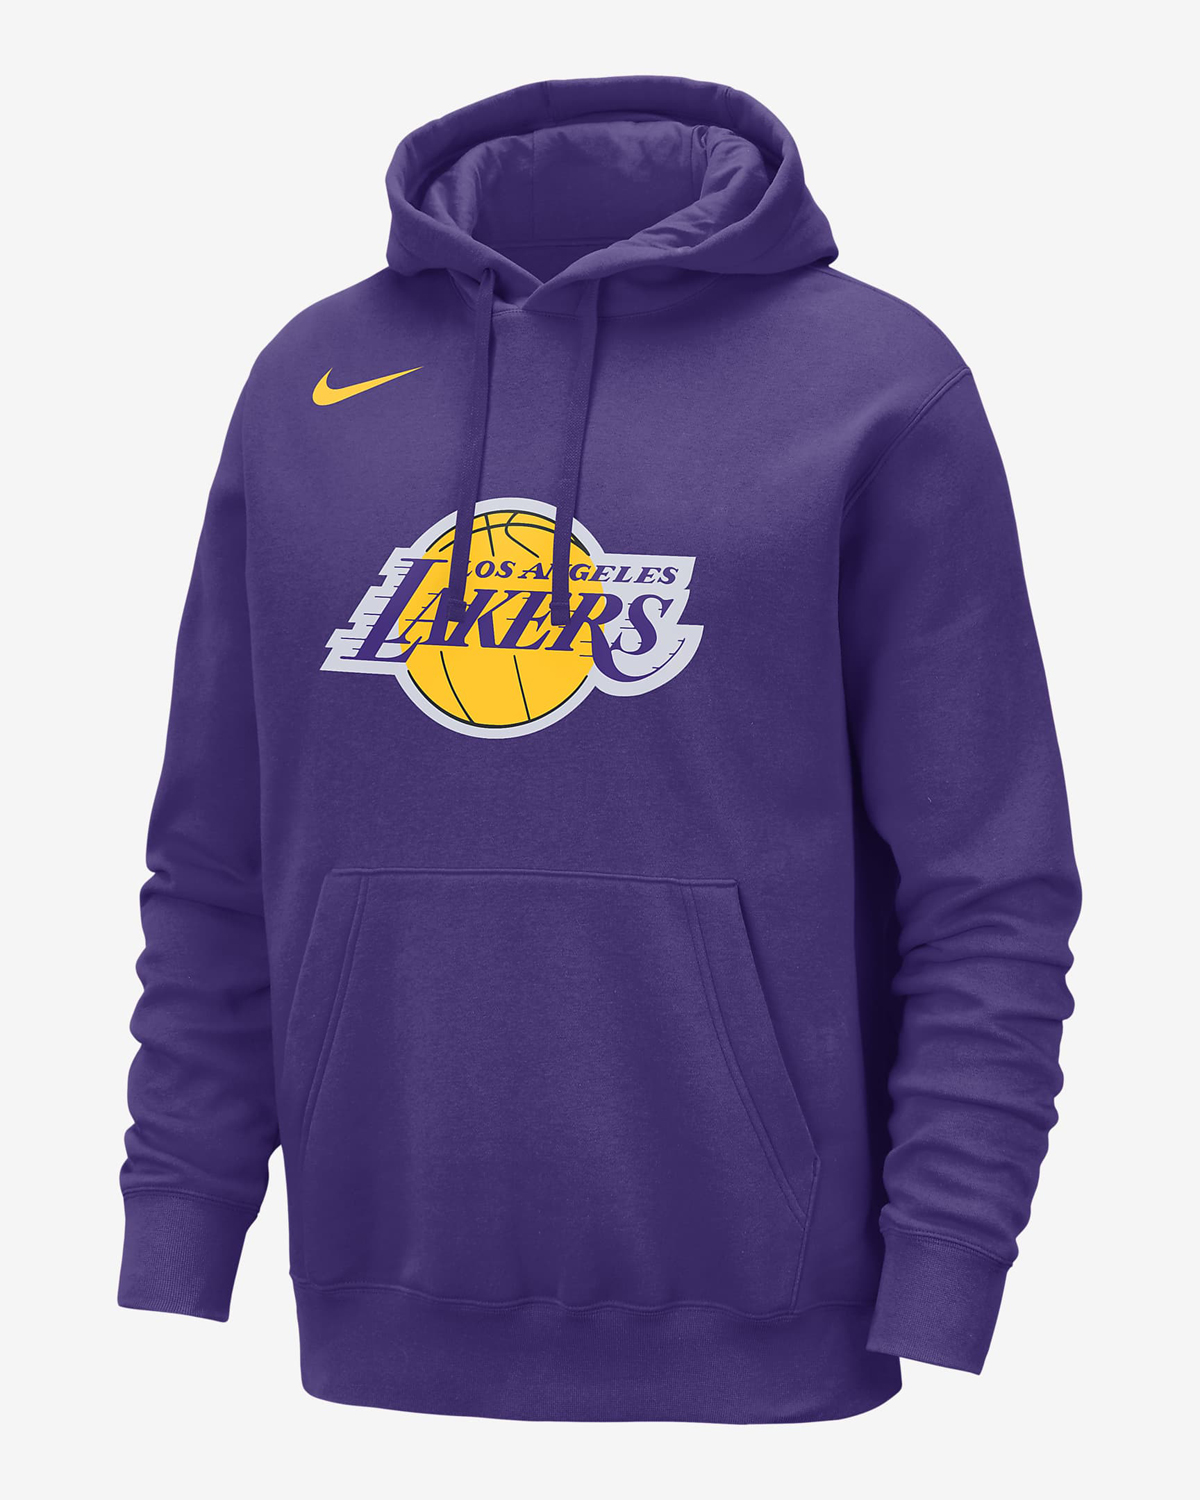 Nike-LA-Lakers-Hoodie-Field-Purple